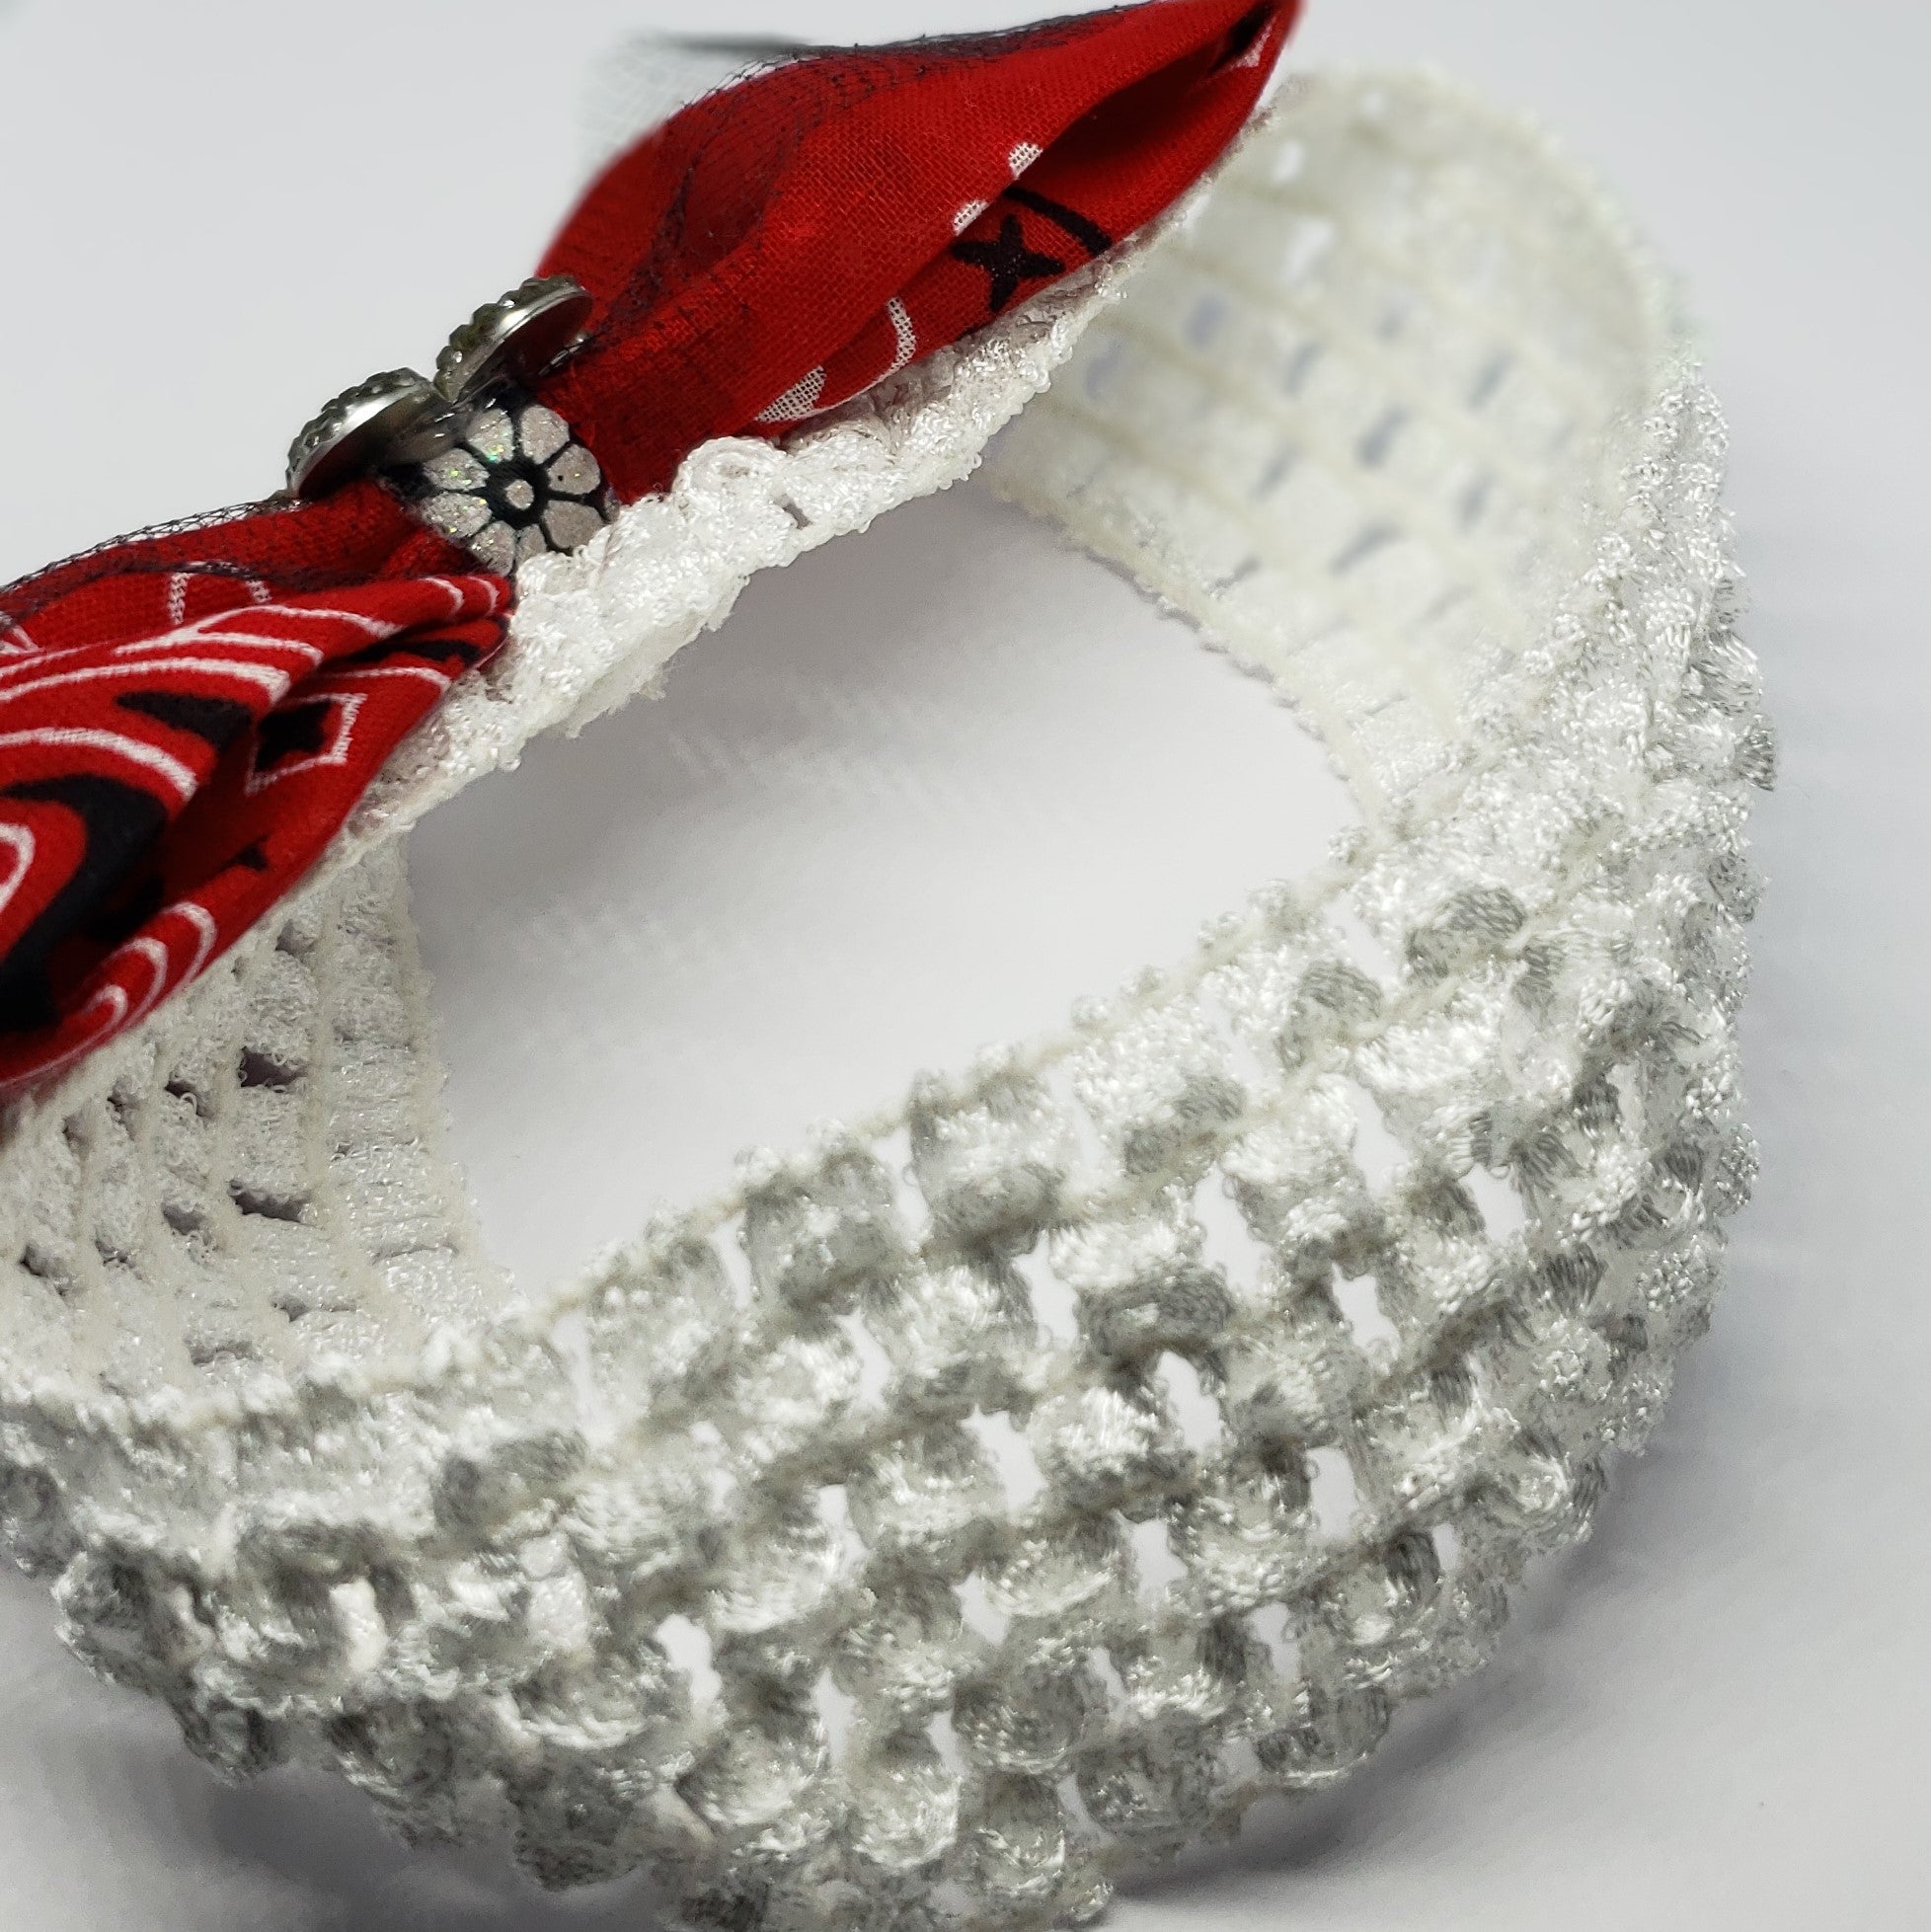 Cassidy-Dior Baby Swarovski Bandanna Crochet Headband in Red Black & White - Houzz of DVA Boutique